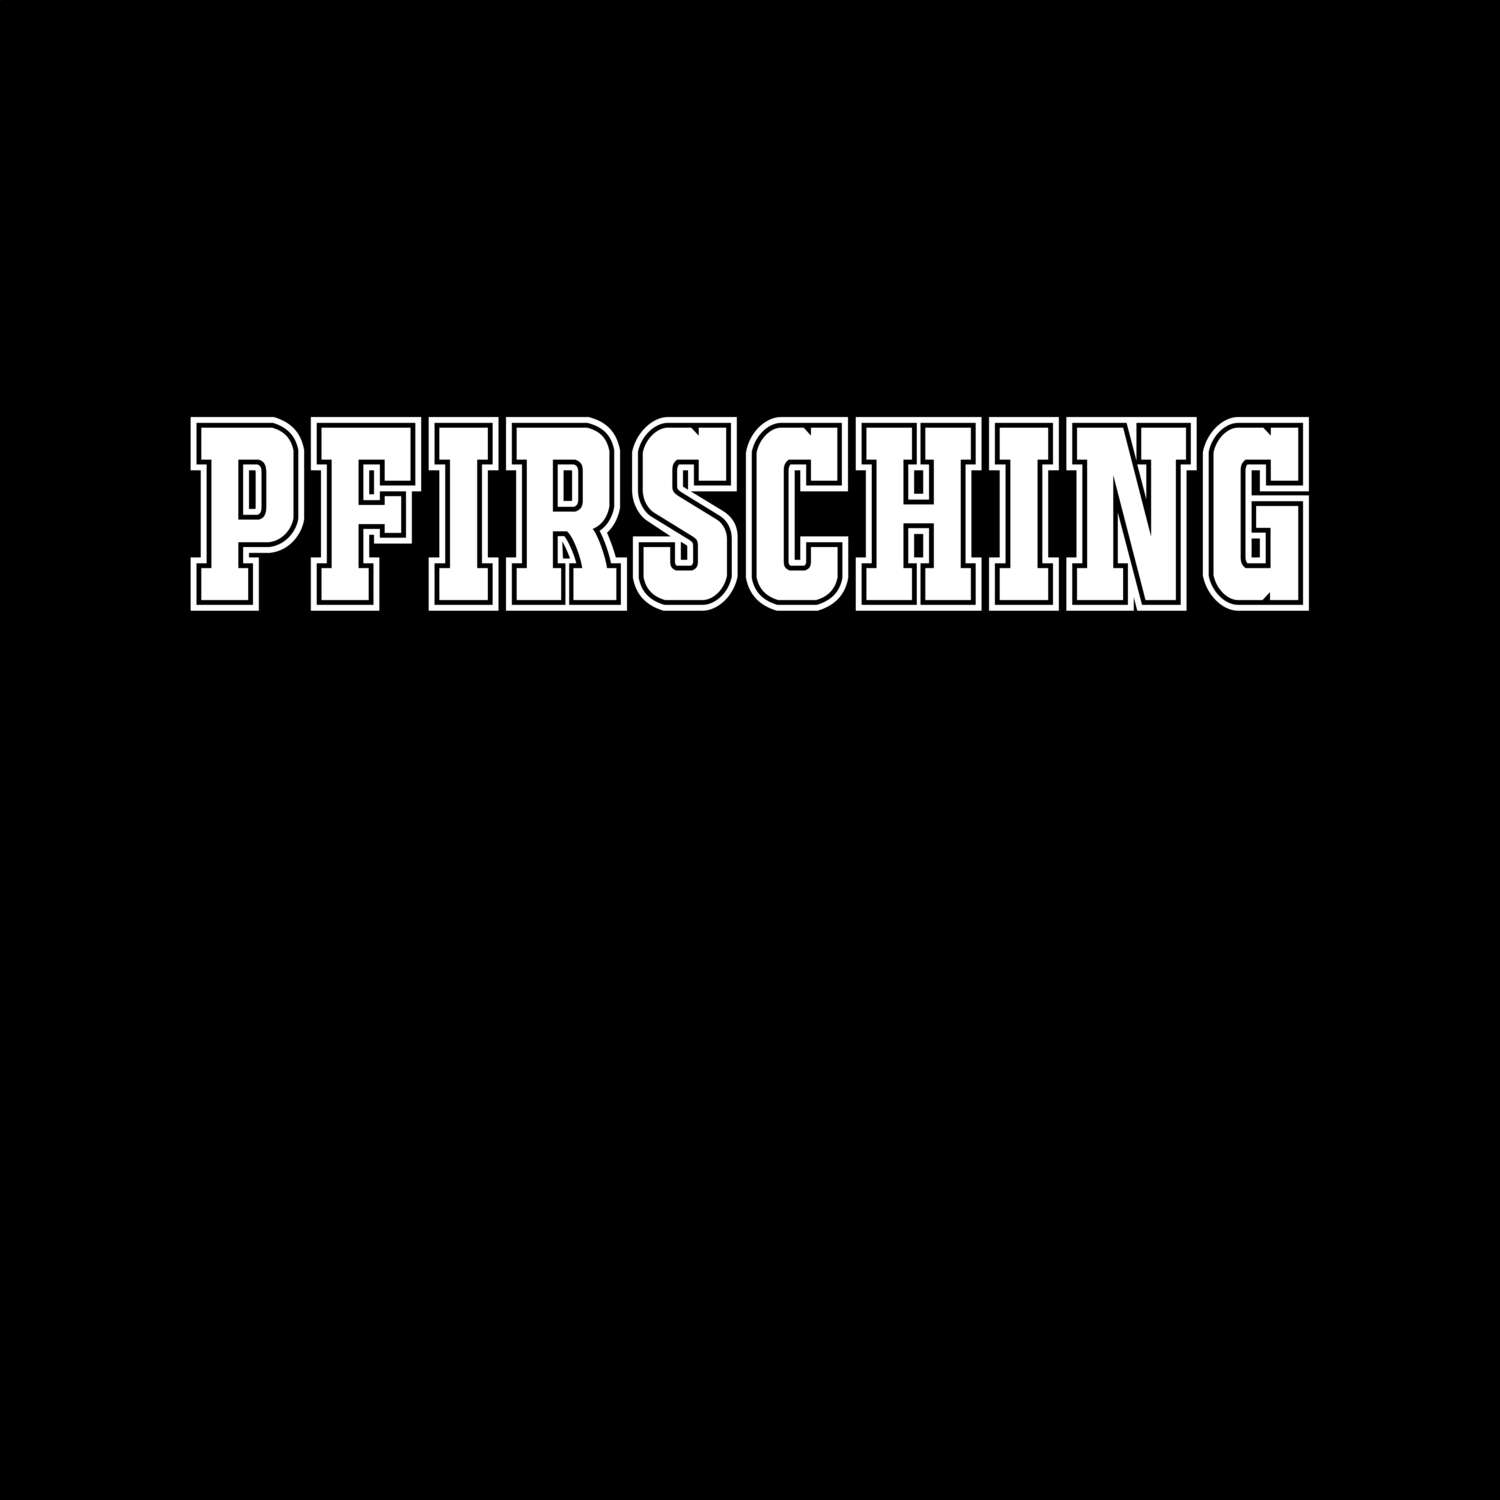 Pfirsching T-Shirt »Classic«